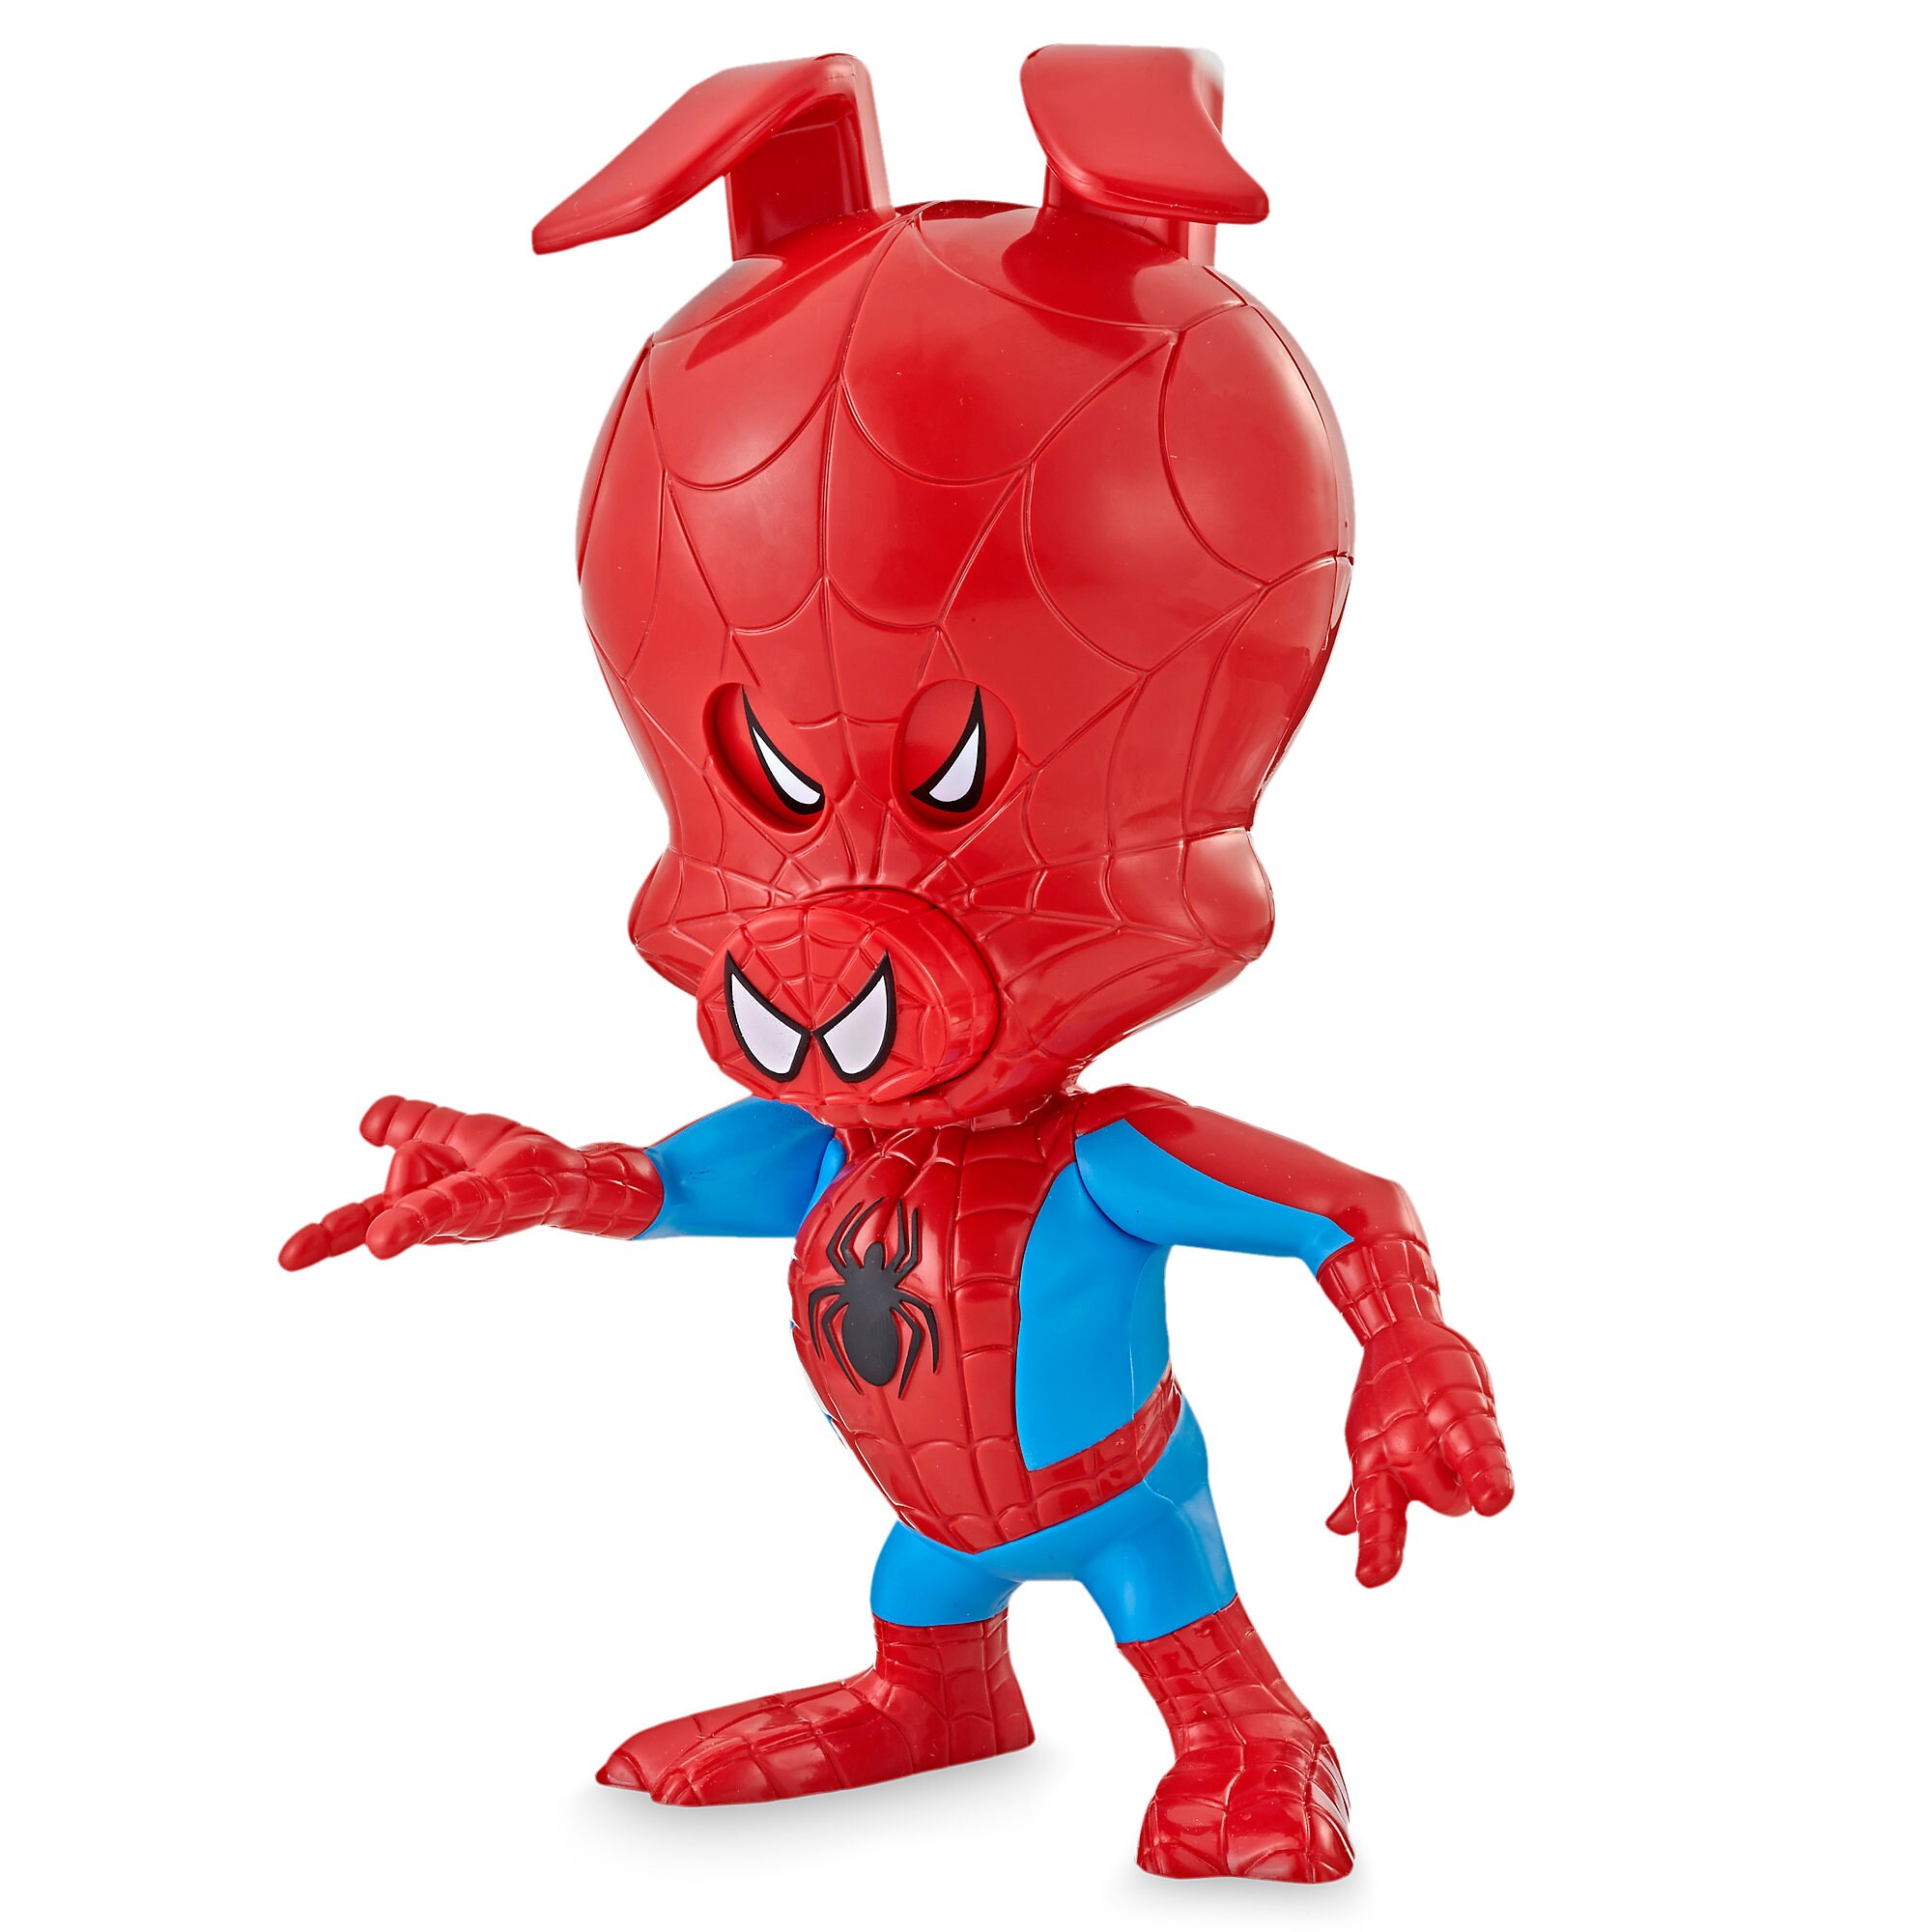 Spider-Ham Spin Vision Action Figure - Spider-Man: Into the Spider-Verse